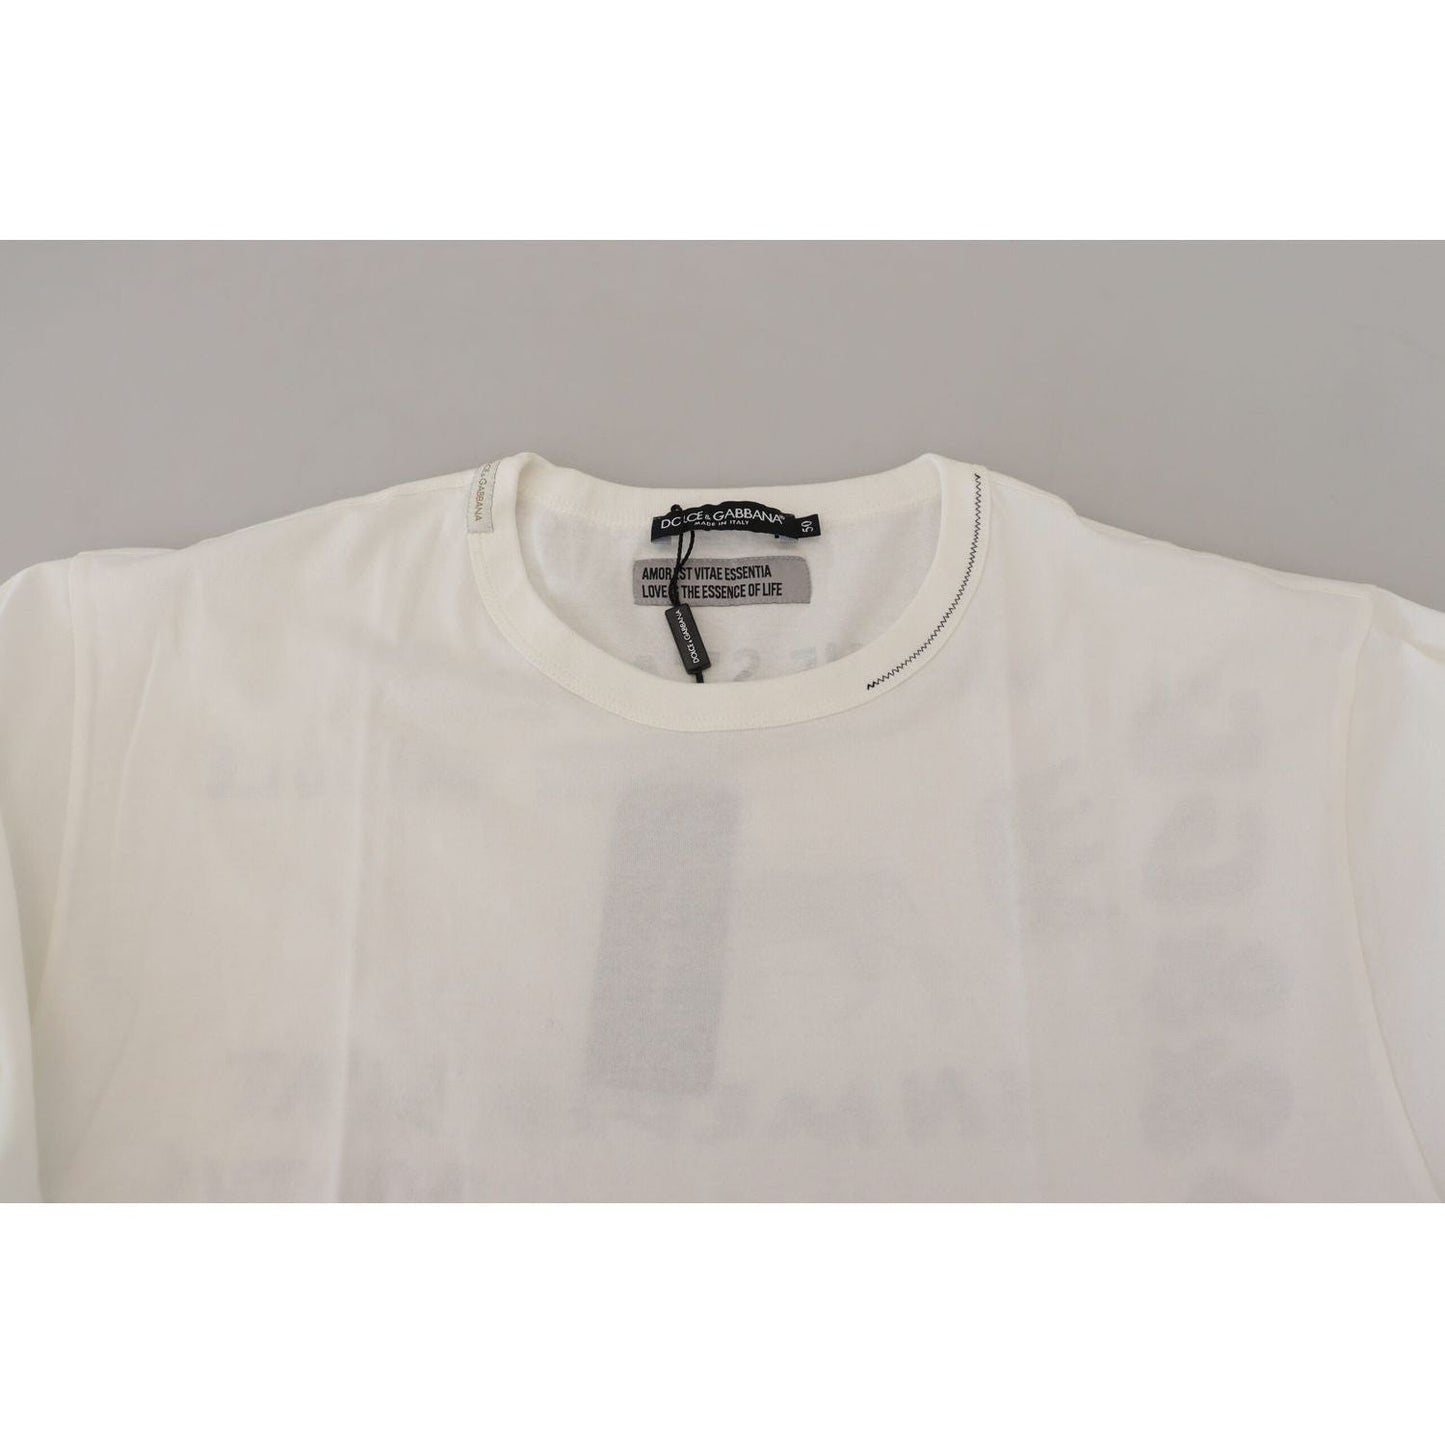 Dolce & Gabbana Elegant Crew Neck Cotton Tee white-printed-short-sleeves-mens-t-shirt IMG_1949-scaled-a696ea5f-726.jpg